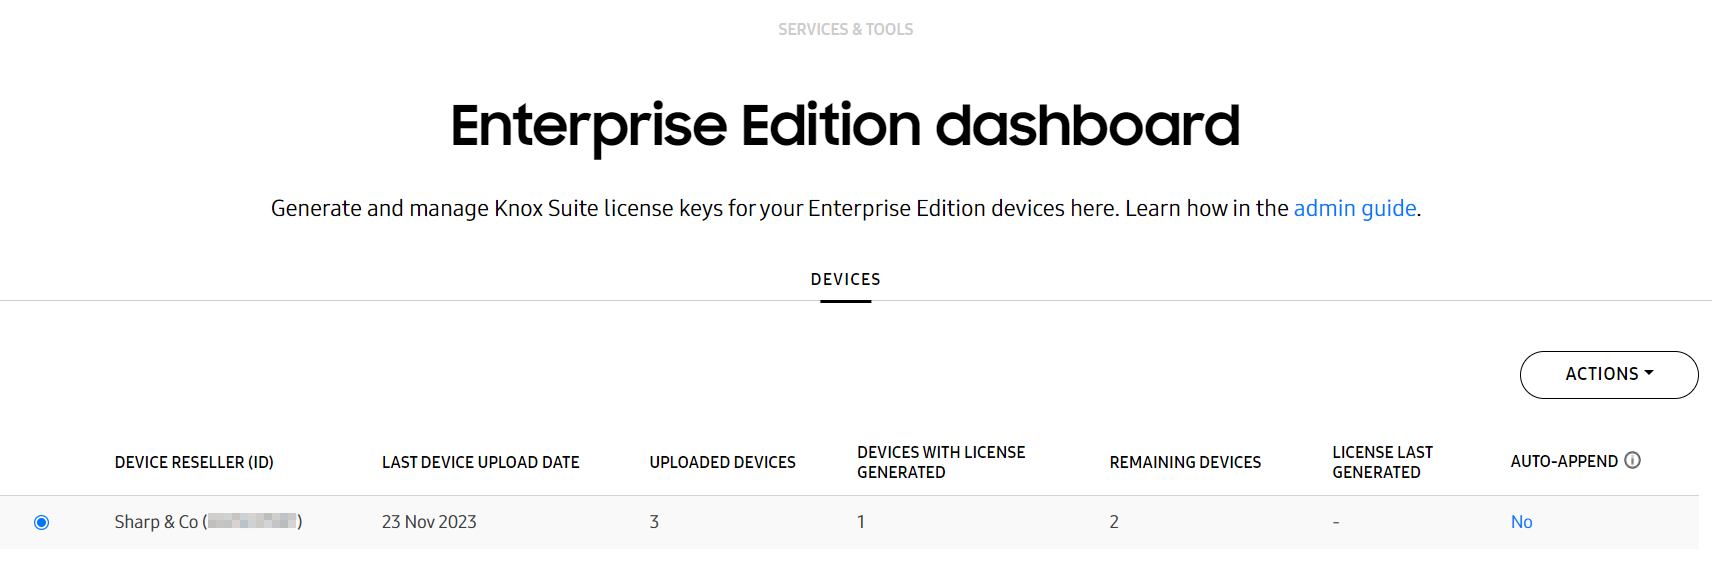 The Enterprise Edition dashboard